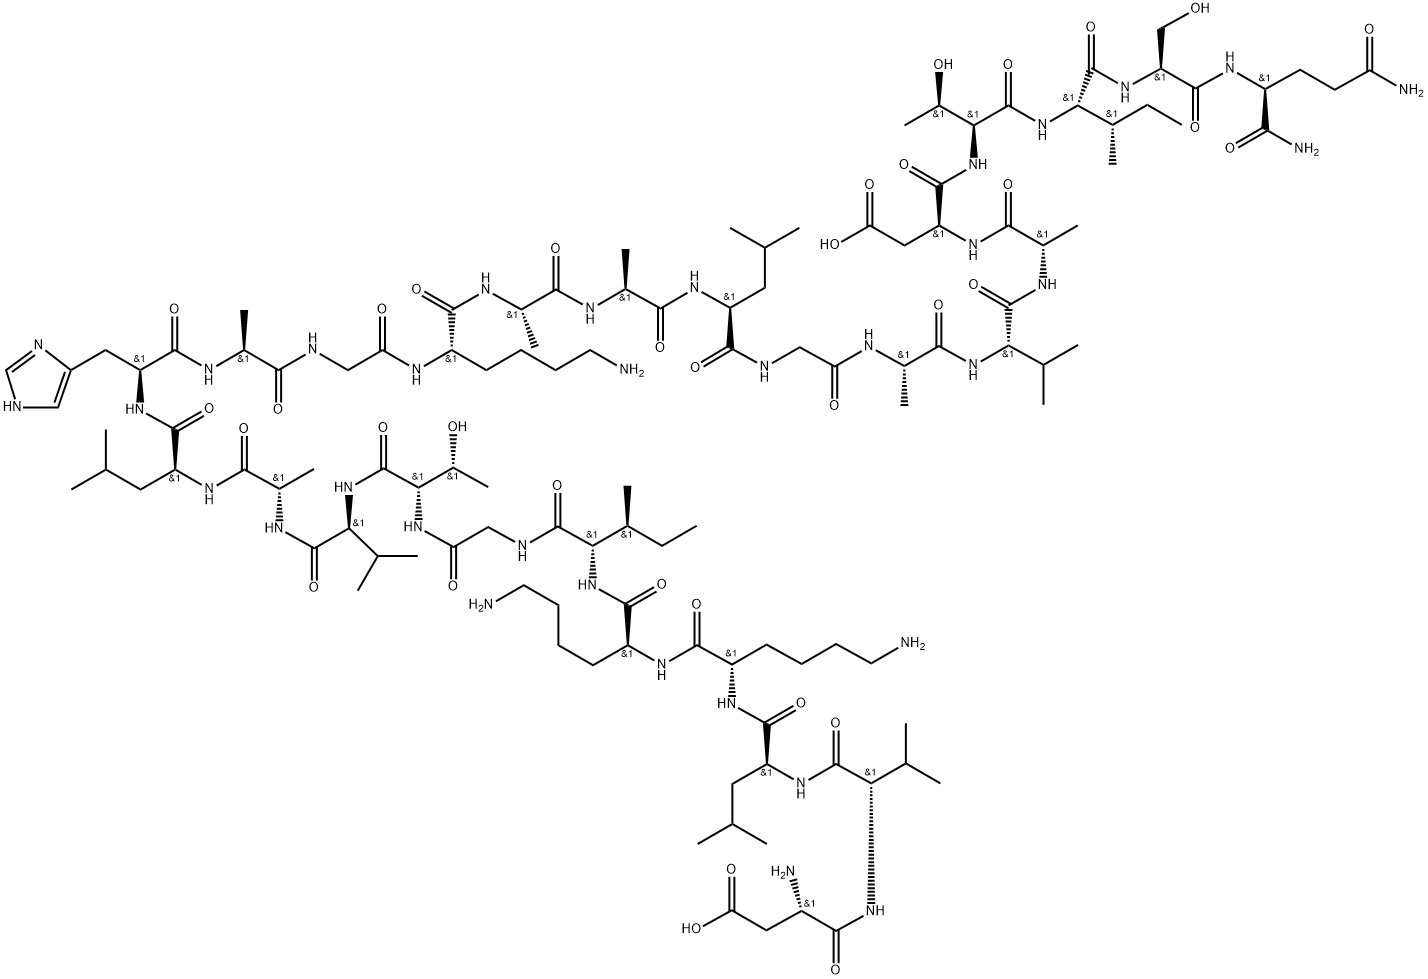 155483-06-0 dermaseptin b